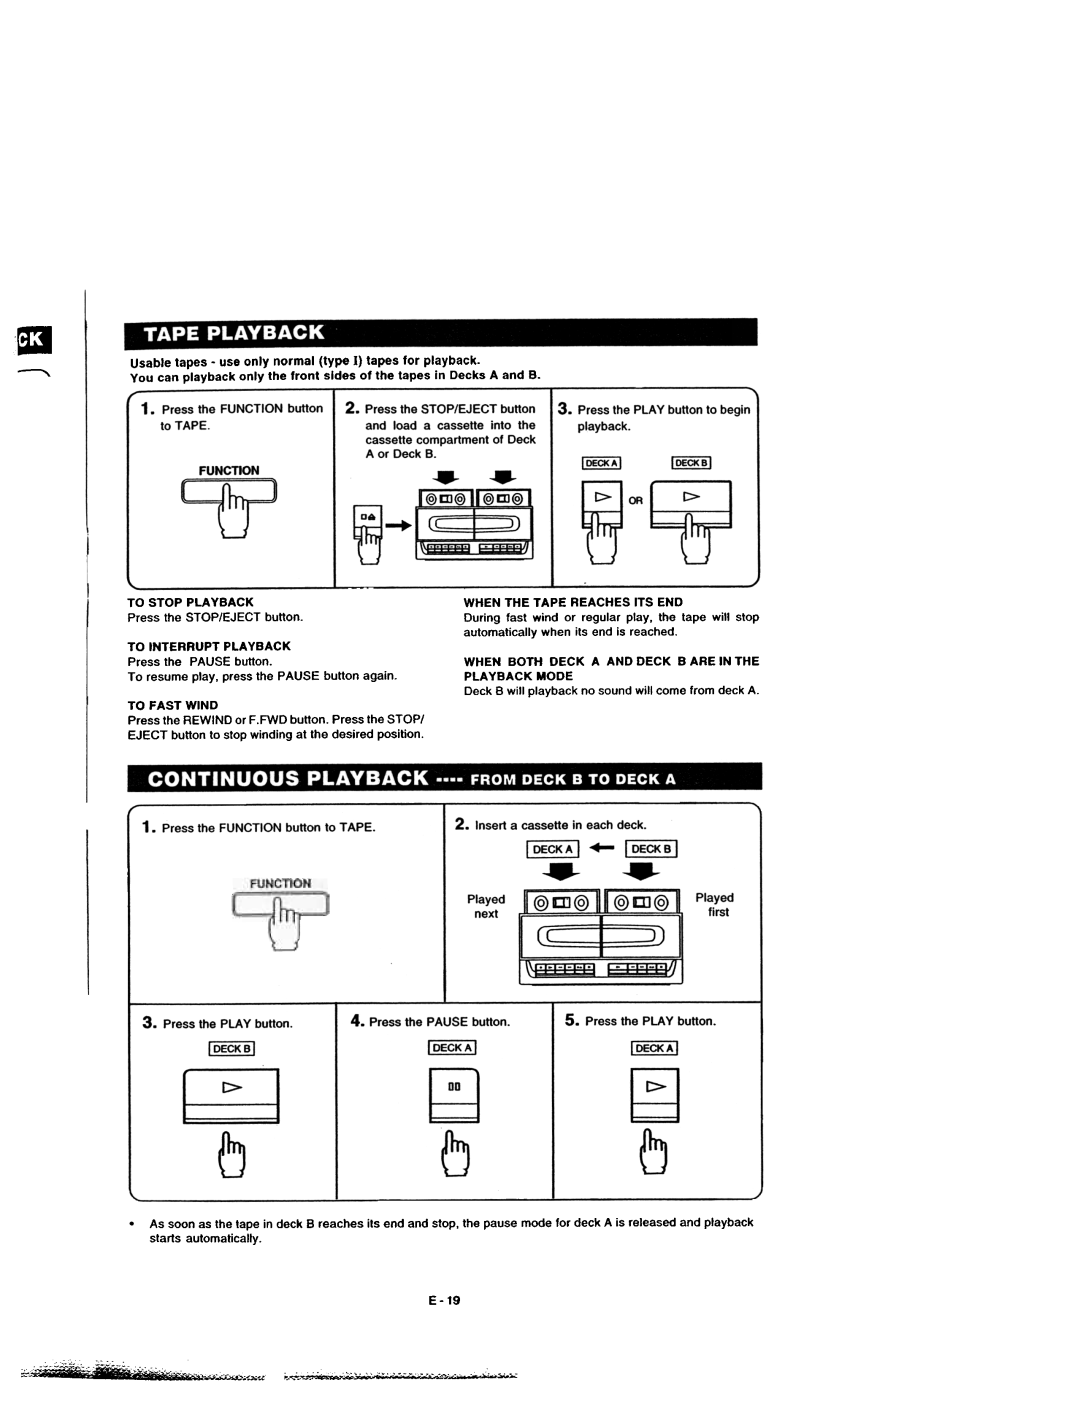 Dolby Laboratories CD Player manual ~-~~, c,c,~,. .-~0-~ . .~, b b b 